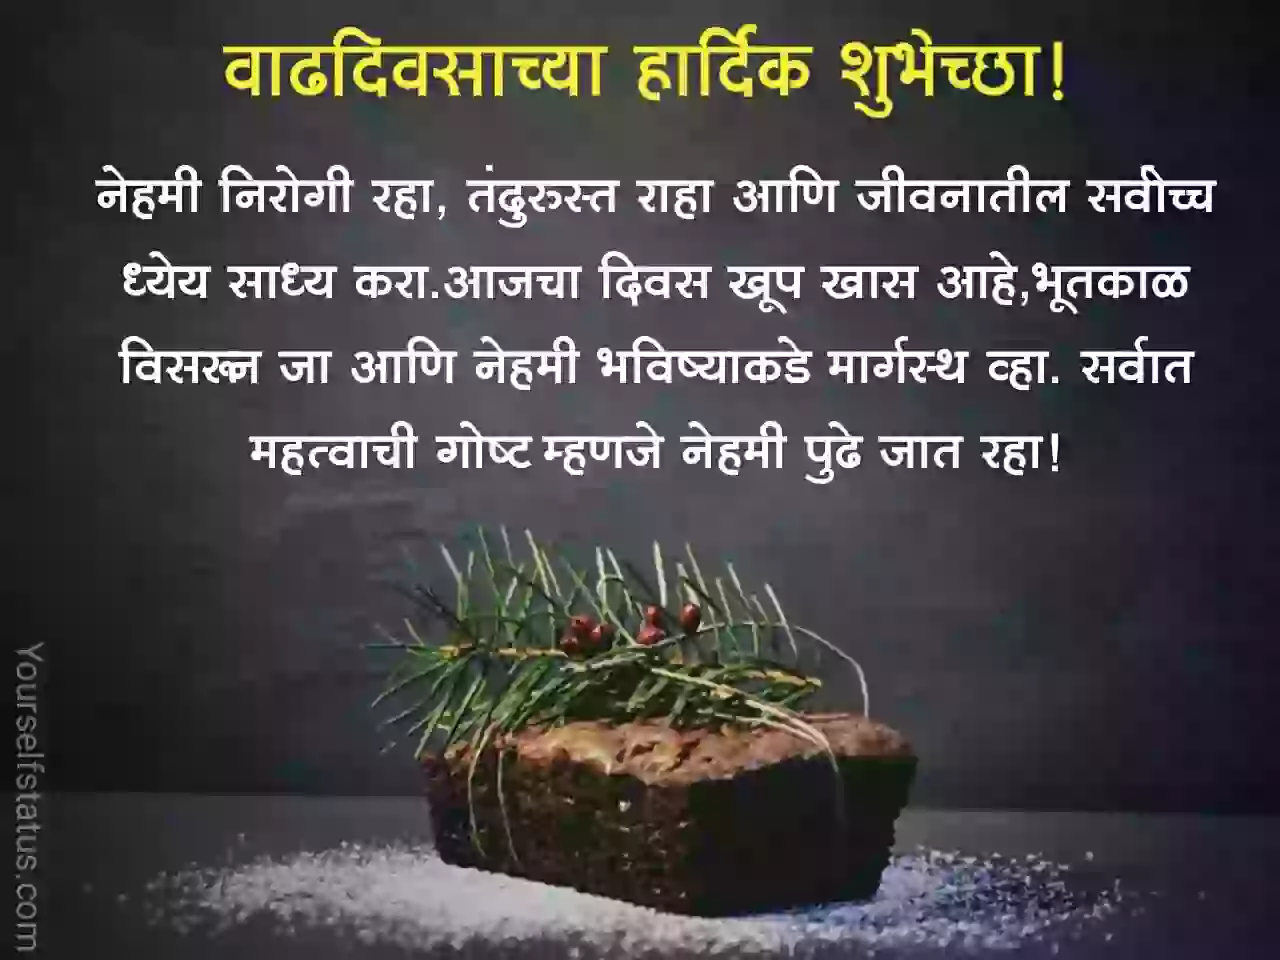 happy birthday images in marathi language